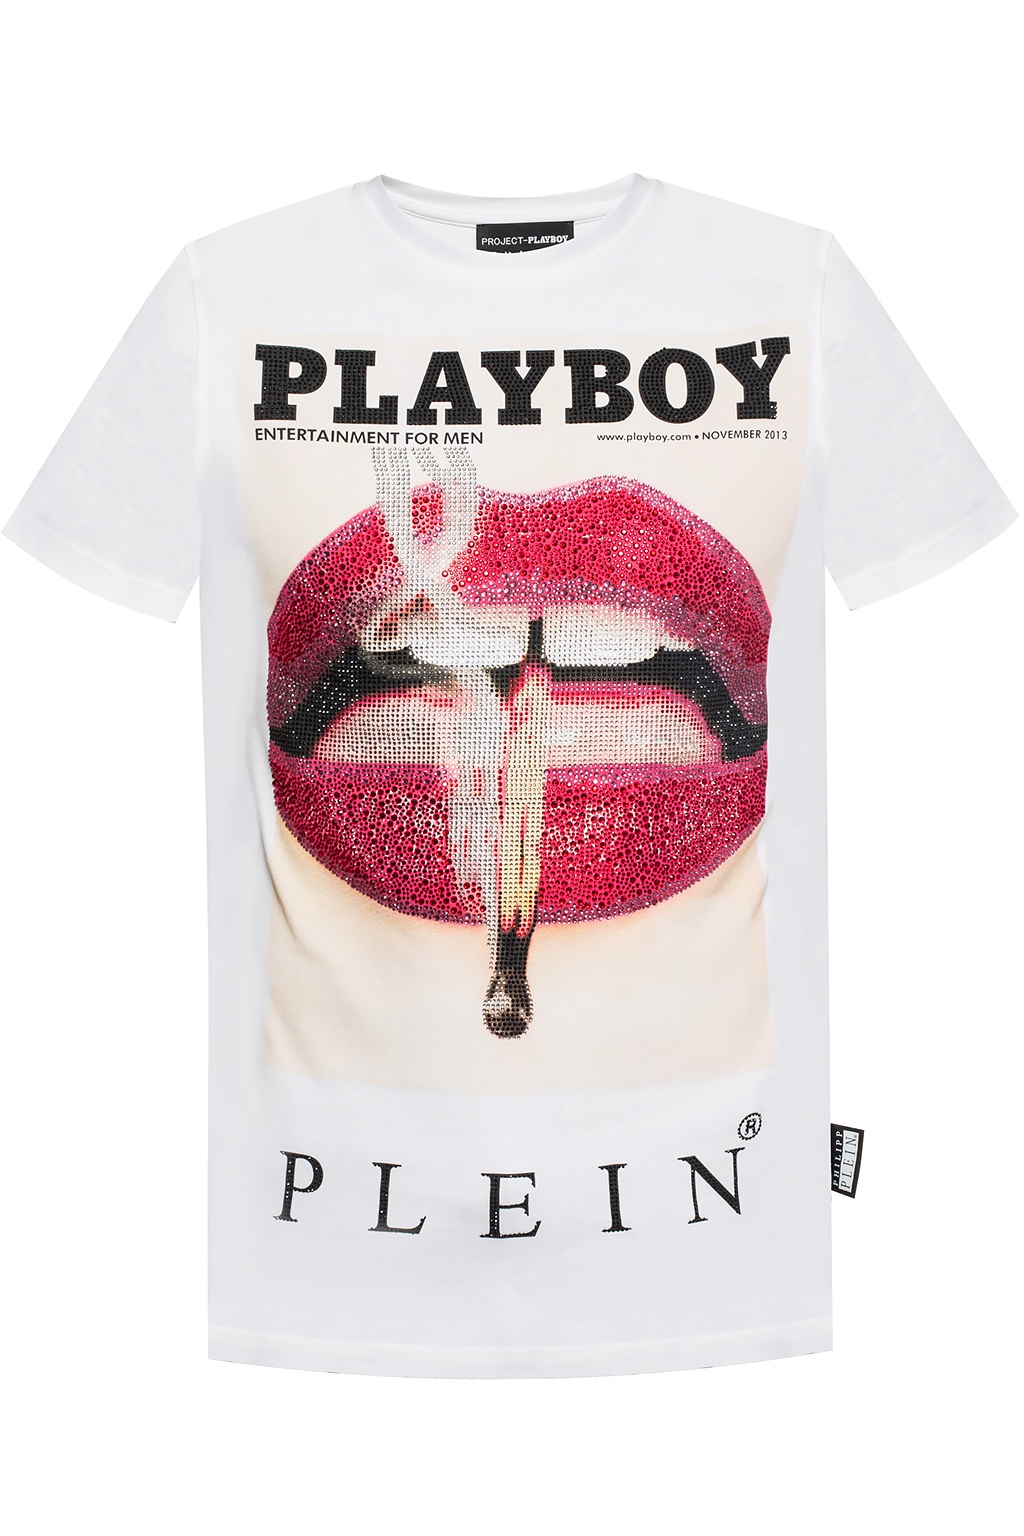 playboy plein t shirt